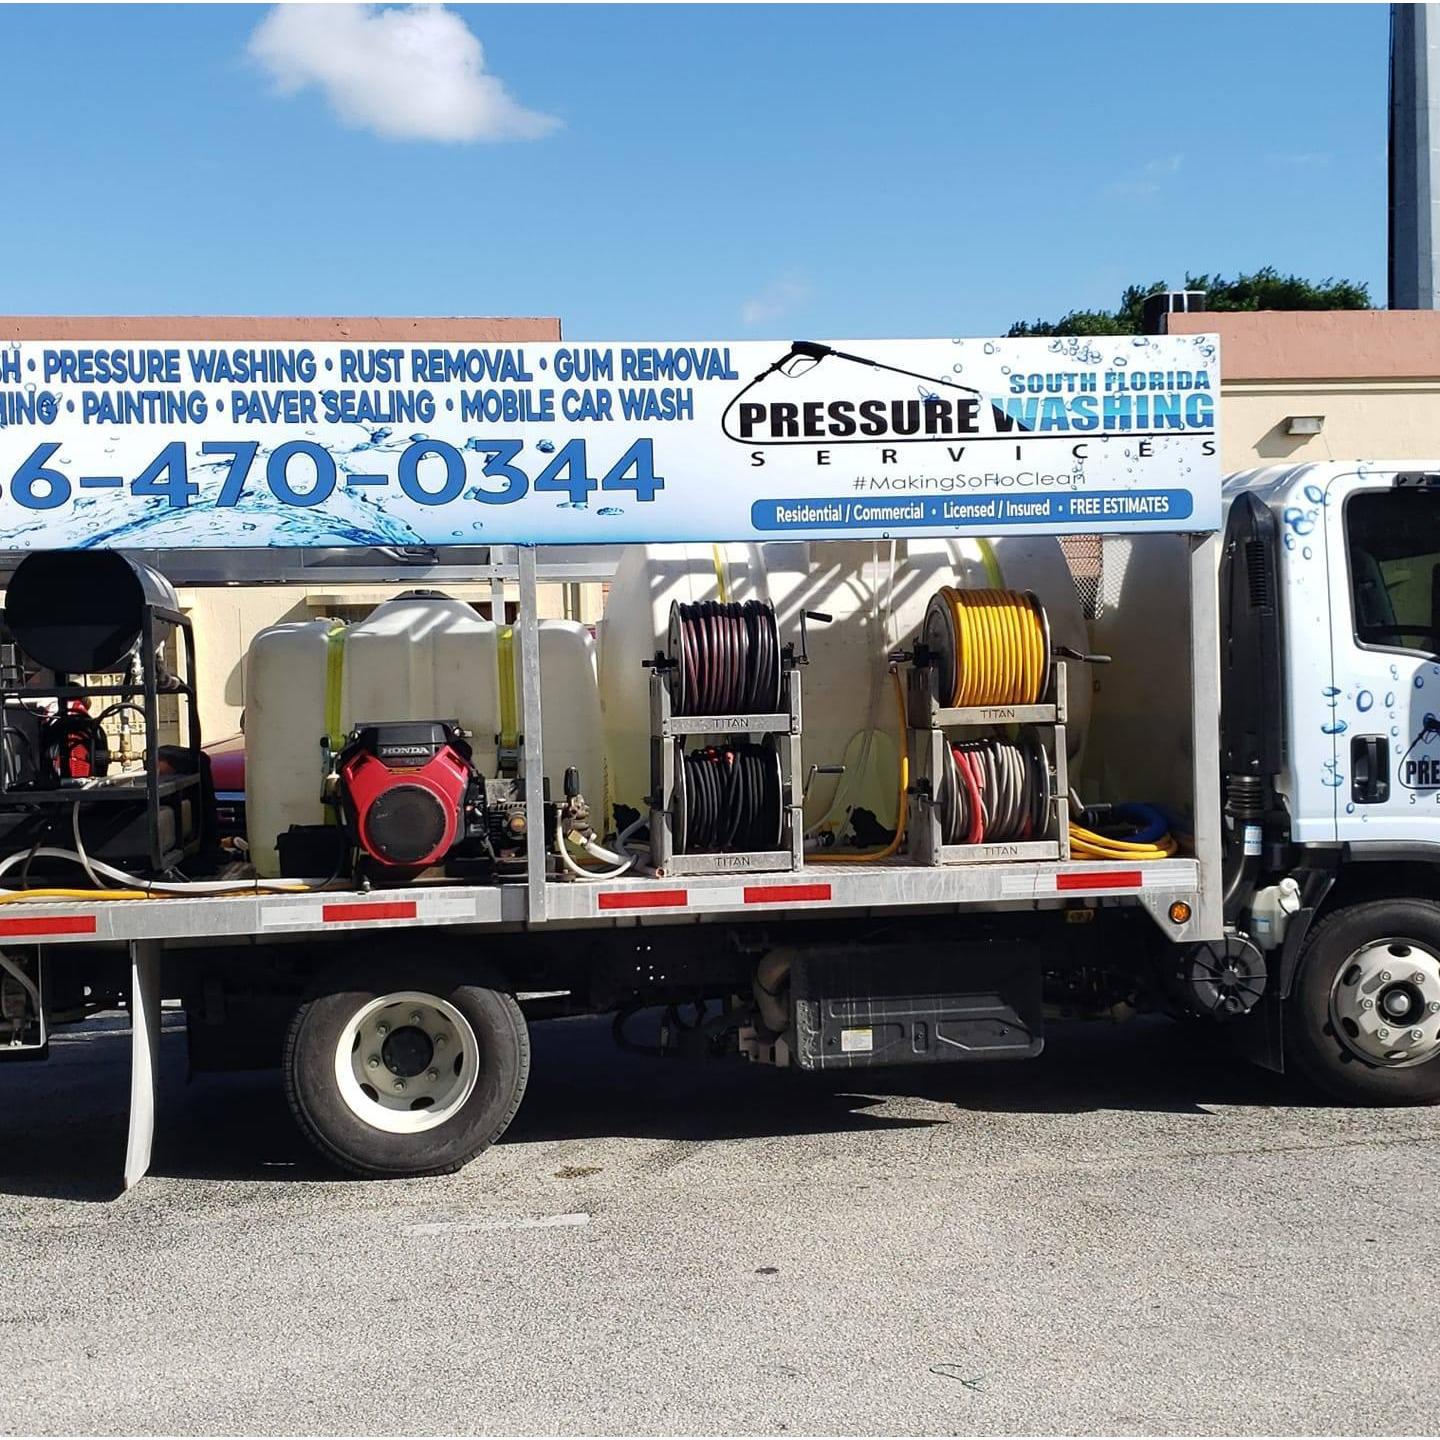 South Florida Pressure Washing Services - Miami, FL - (786)470-0344 | ShowMeLocal.com